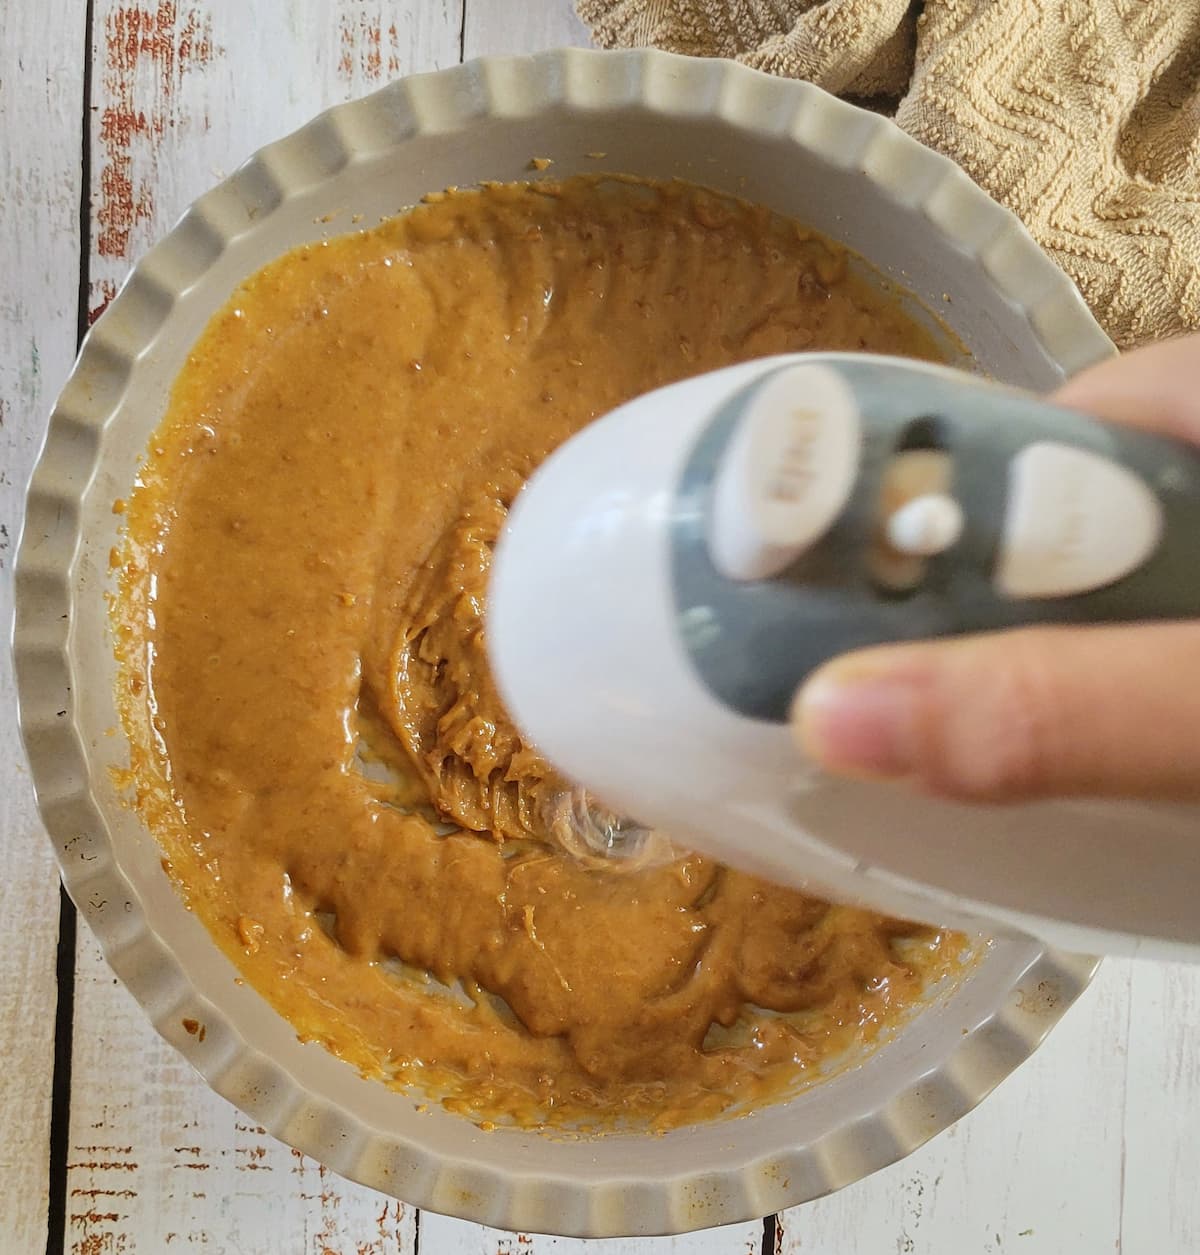 hand with a blender blending caramel sauce in a pan